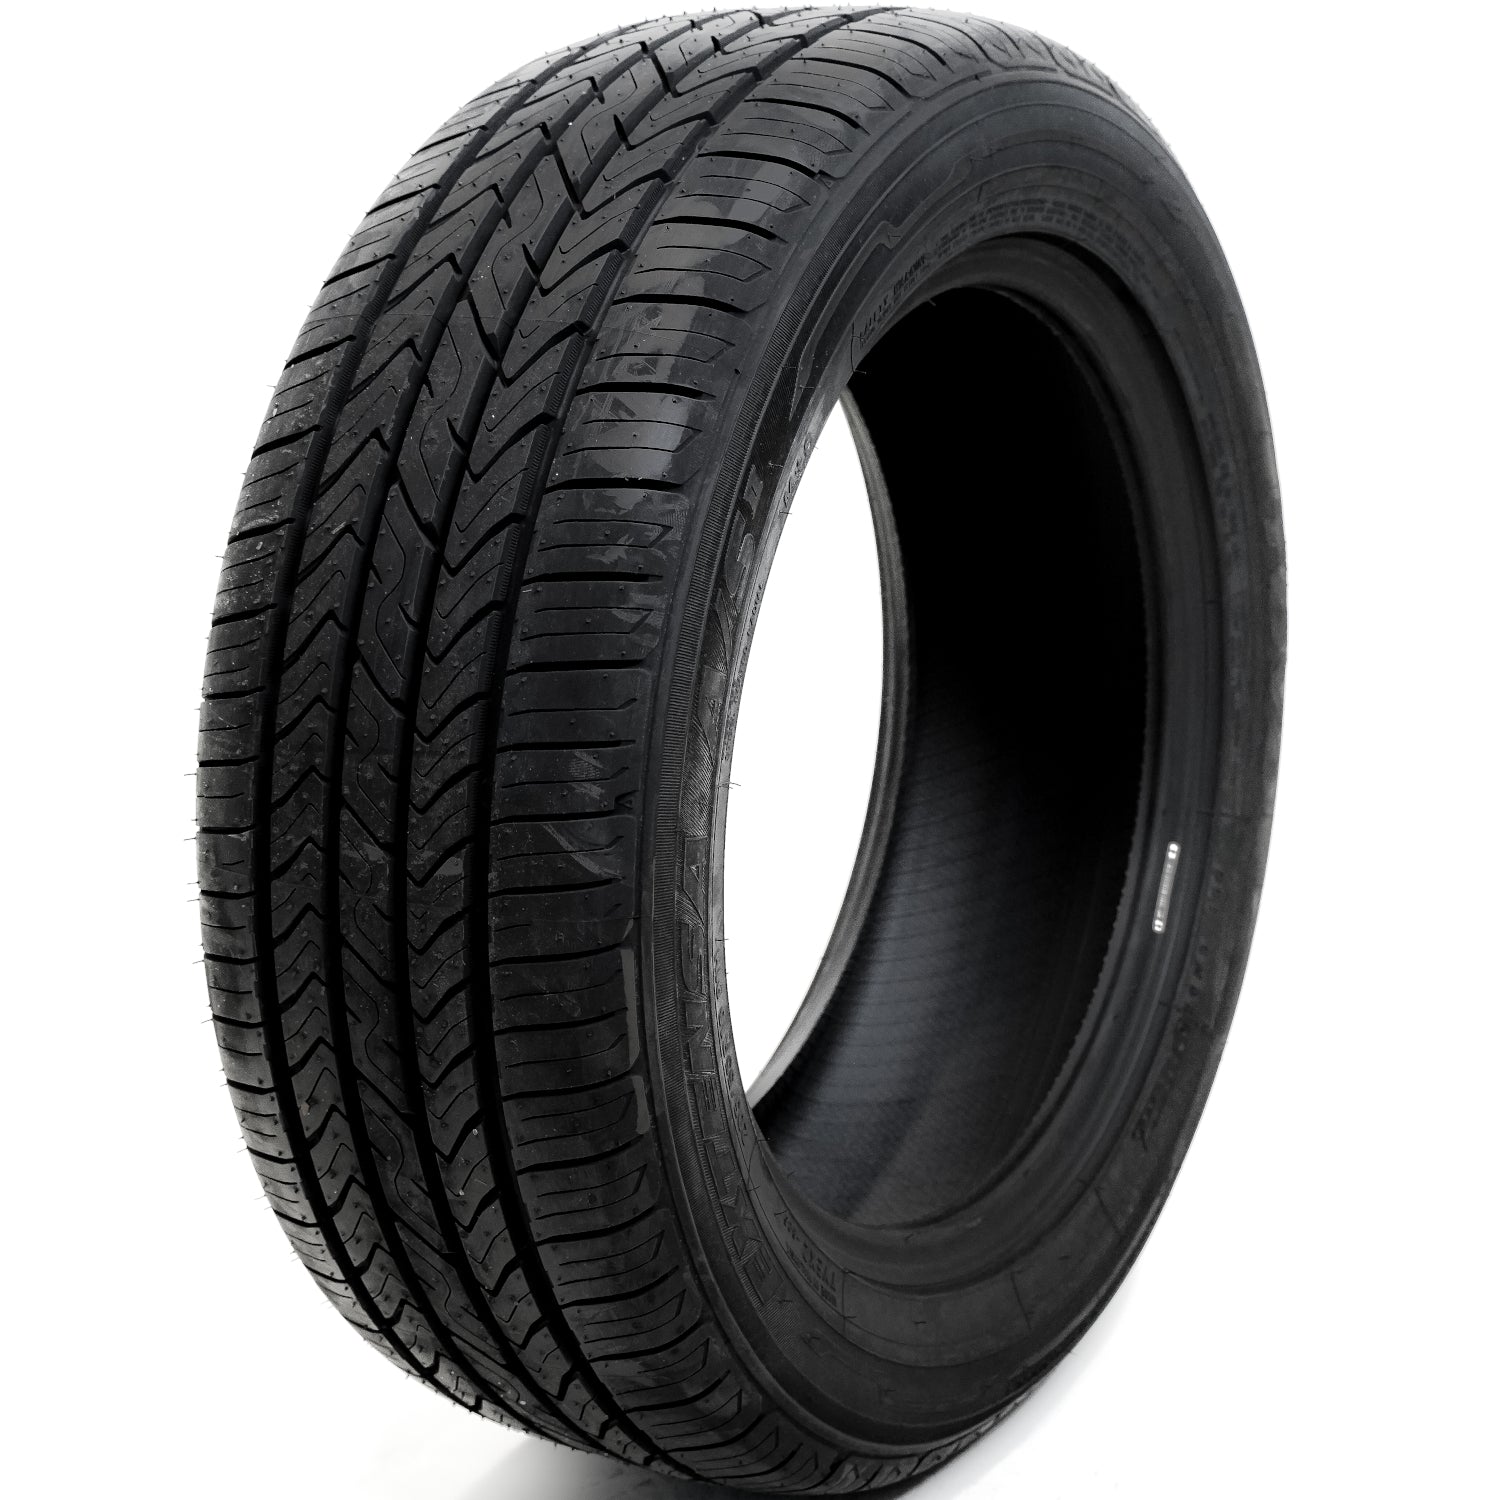 TOYO TIRES EXTENSA A/S II 215/55R17 (26.3X8.5R 17) Tires